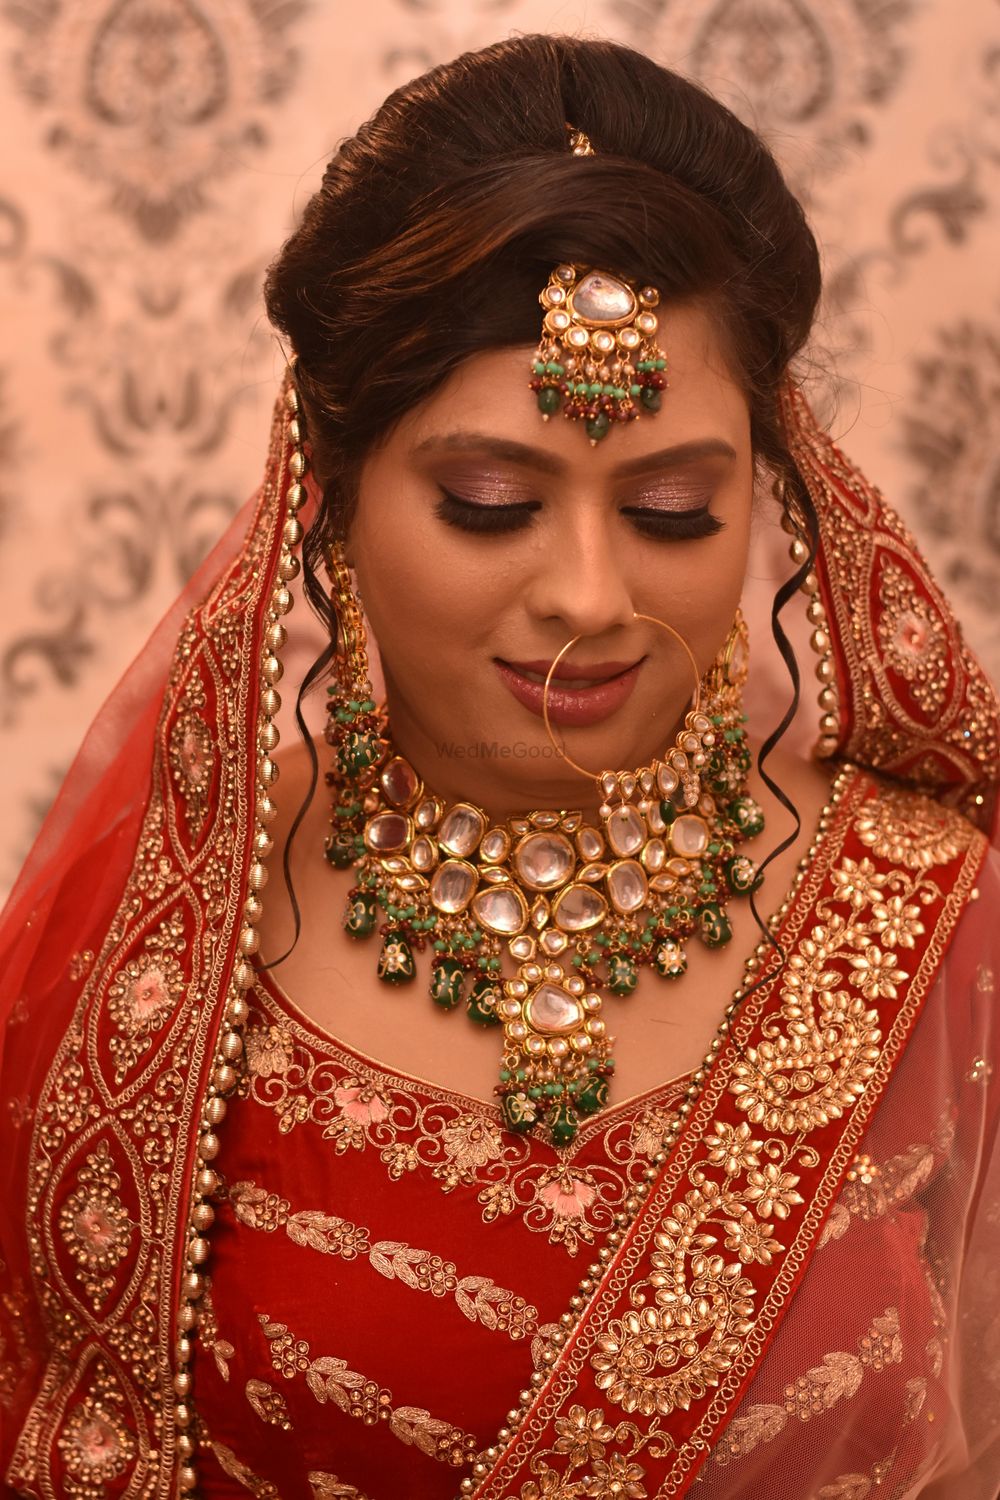 Photo From Non Bengali Marwari Brides - By Namrata's Studio